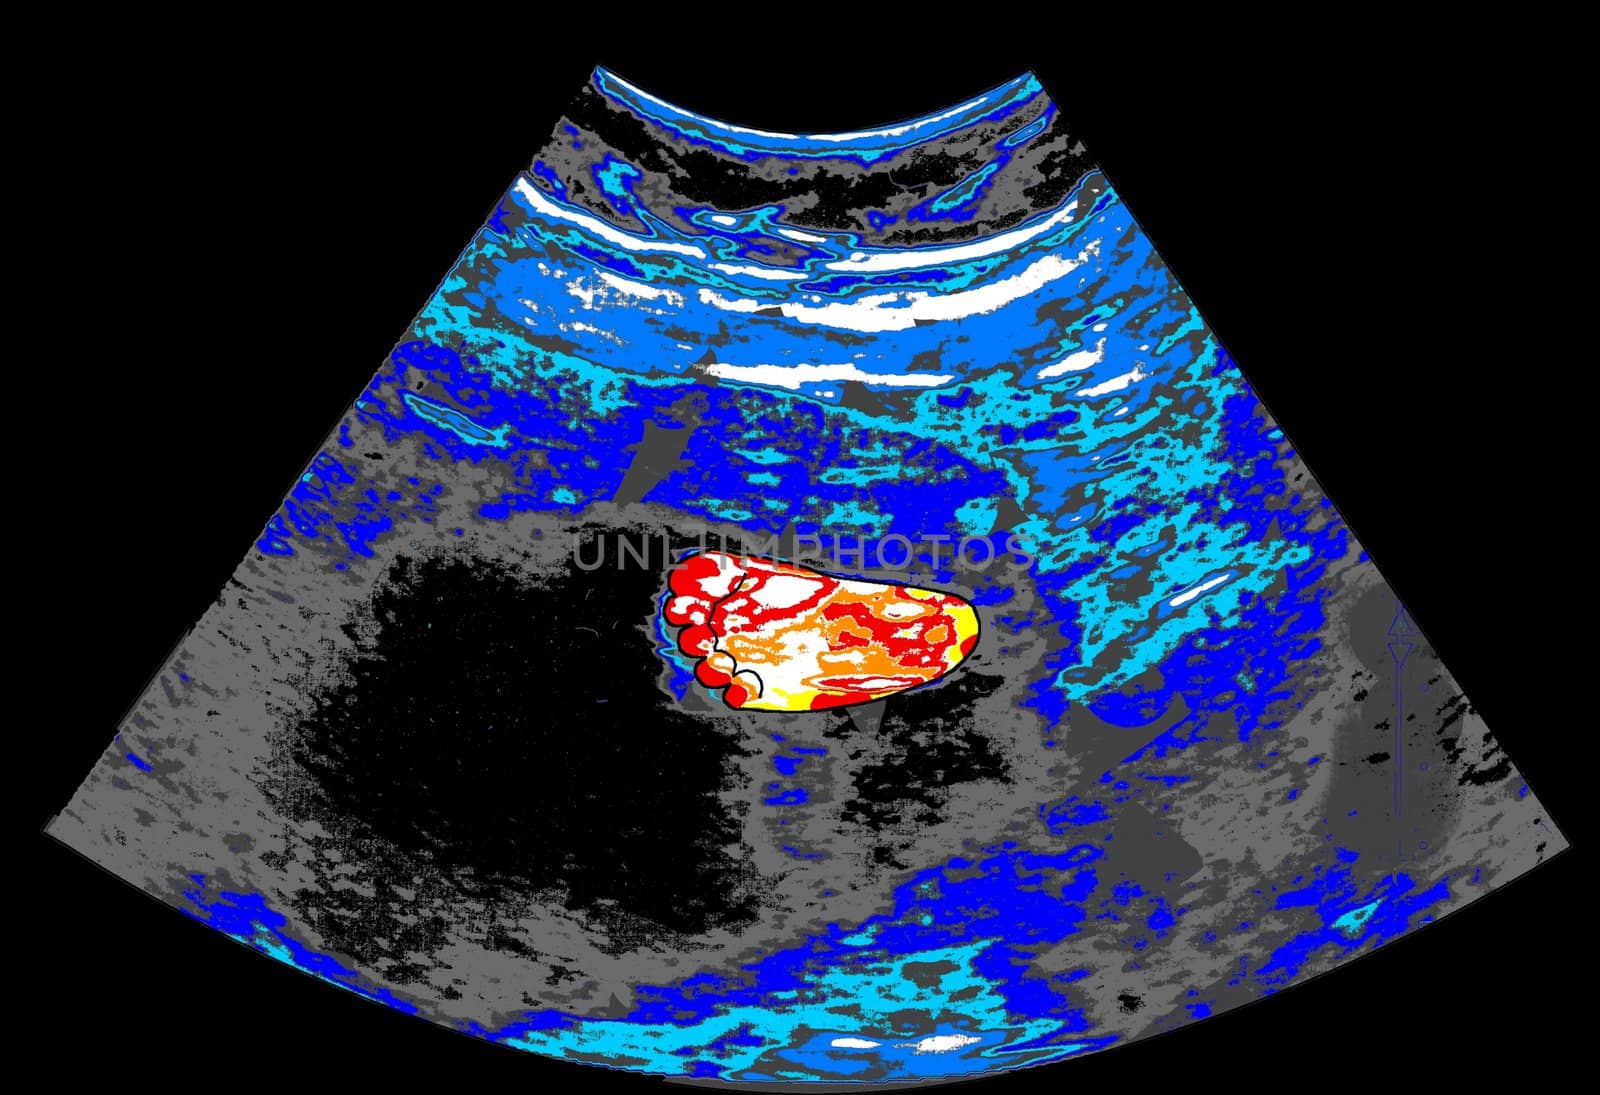 Ultrasound with Baby Foot by karensuki